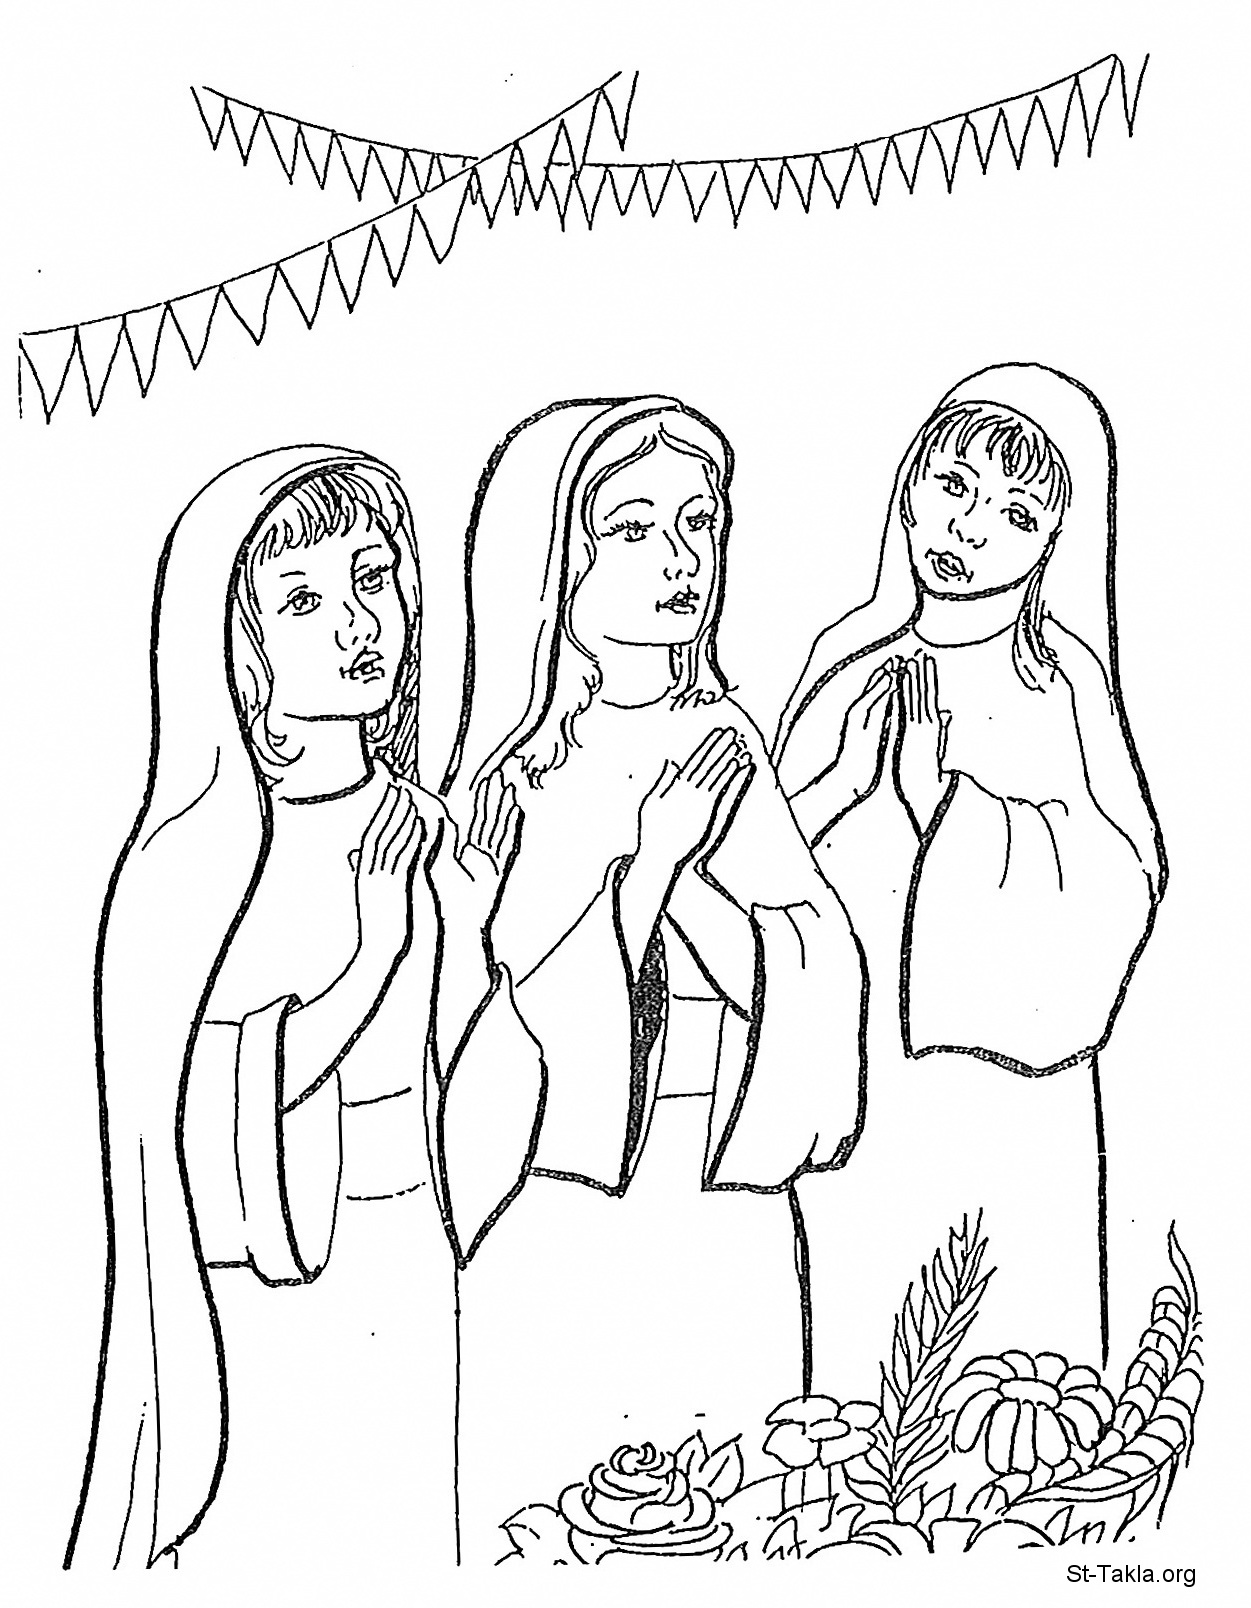 St-Takla.org Image: Three young women, wedding celebration, happiness, thankful صورة في موقع الأنبا تكلا: ثلاثة شابات، فتيات خلال عُرس (فرح)، الفرح، الشكر